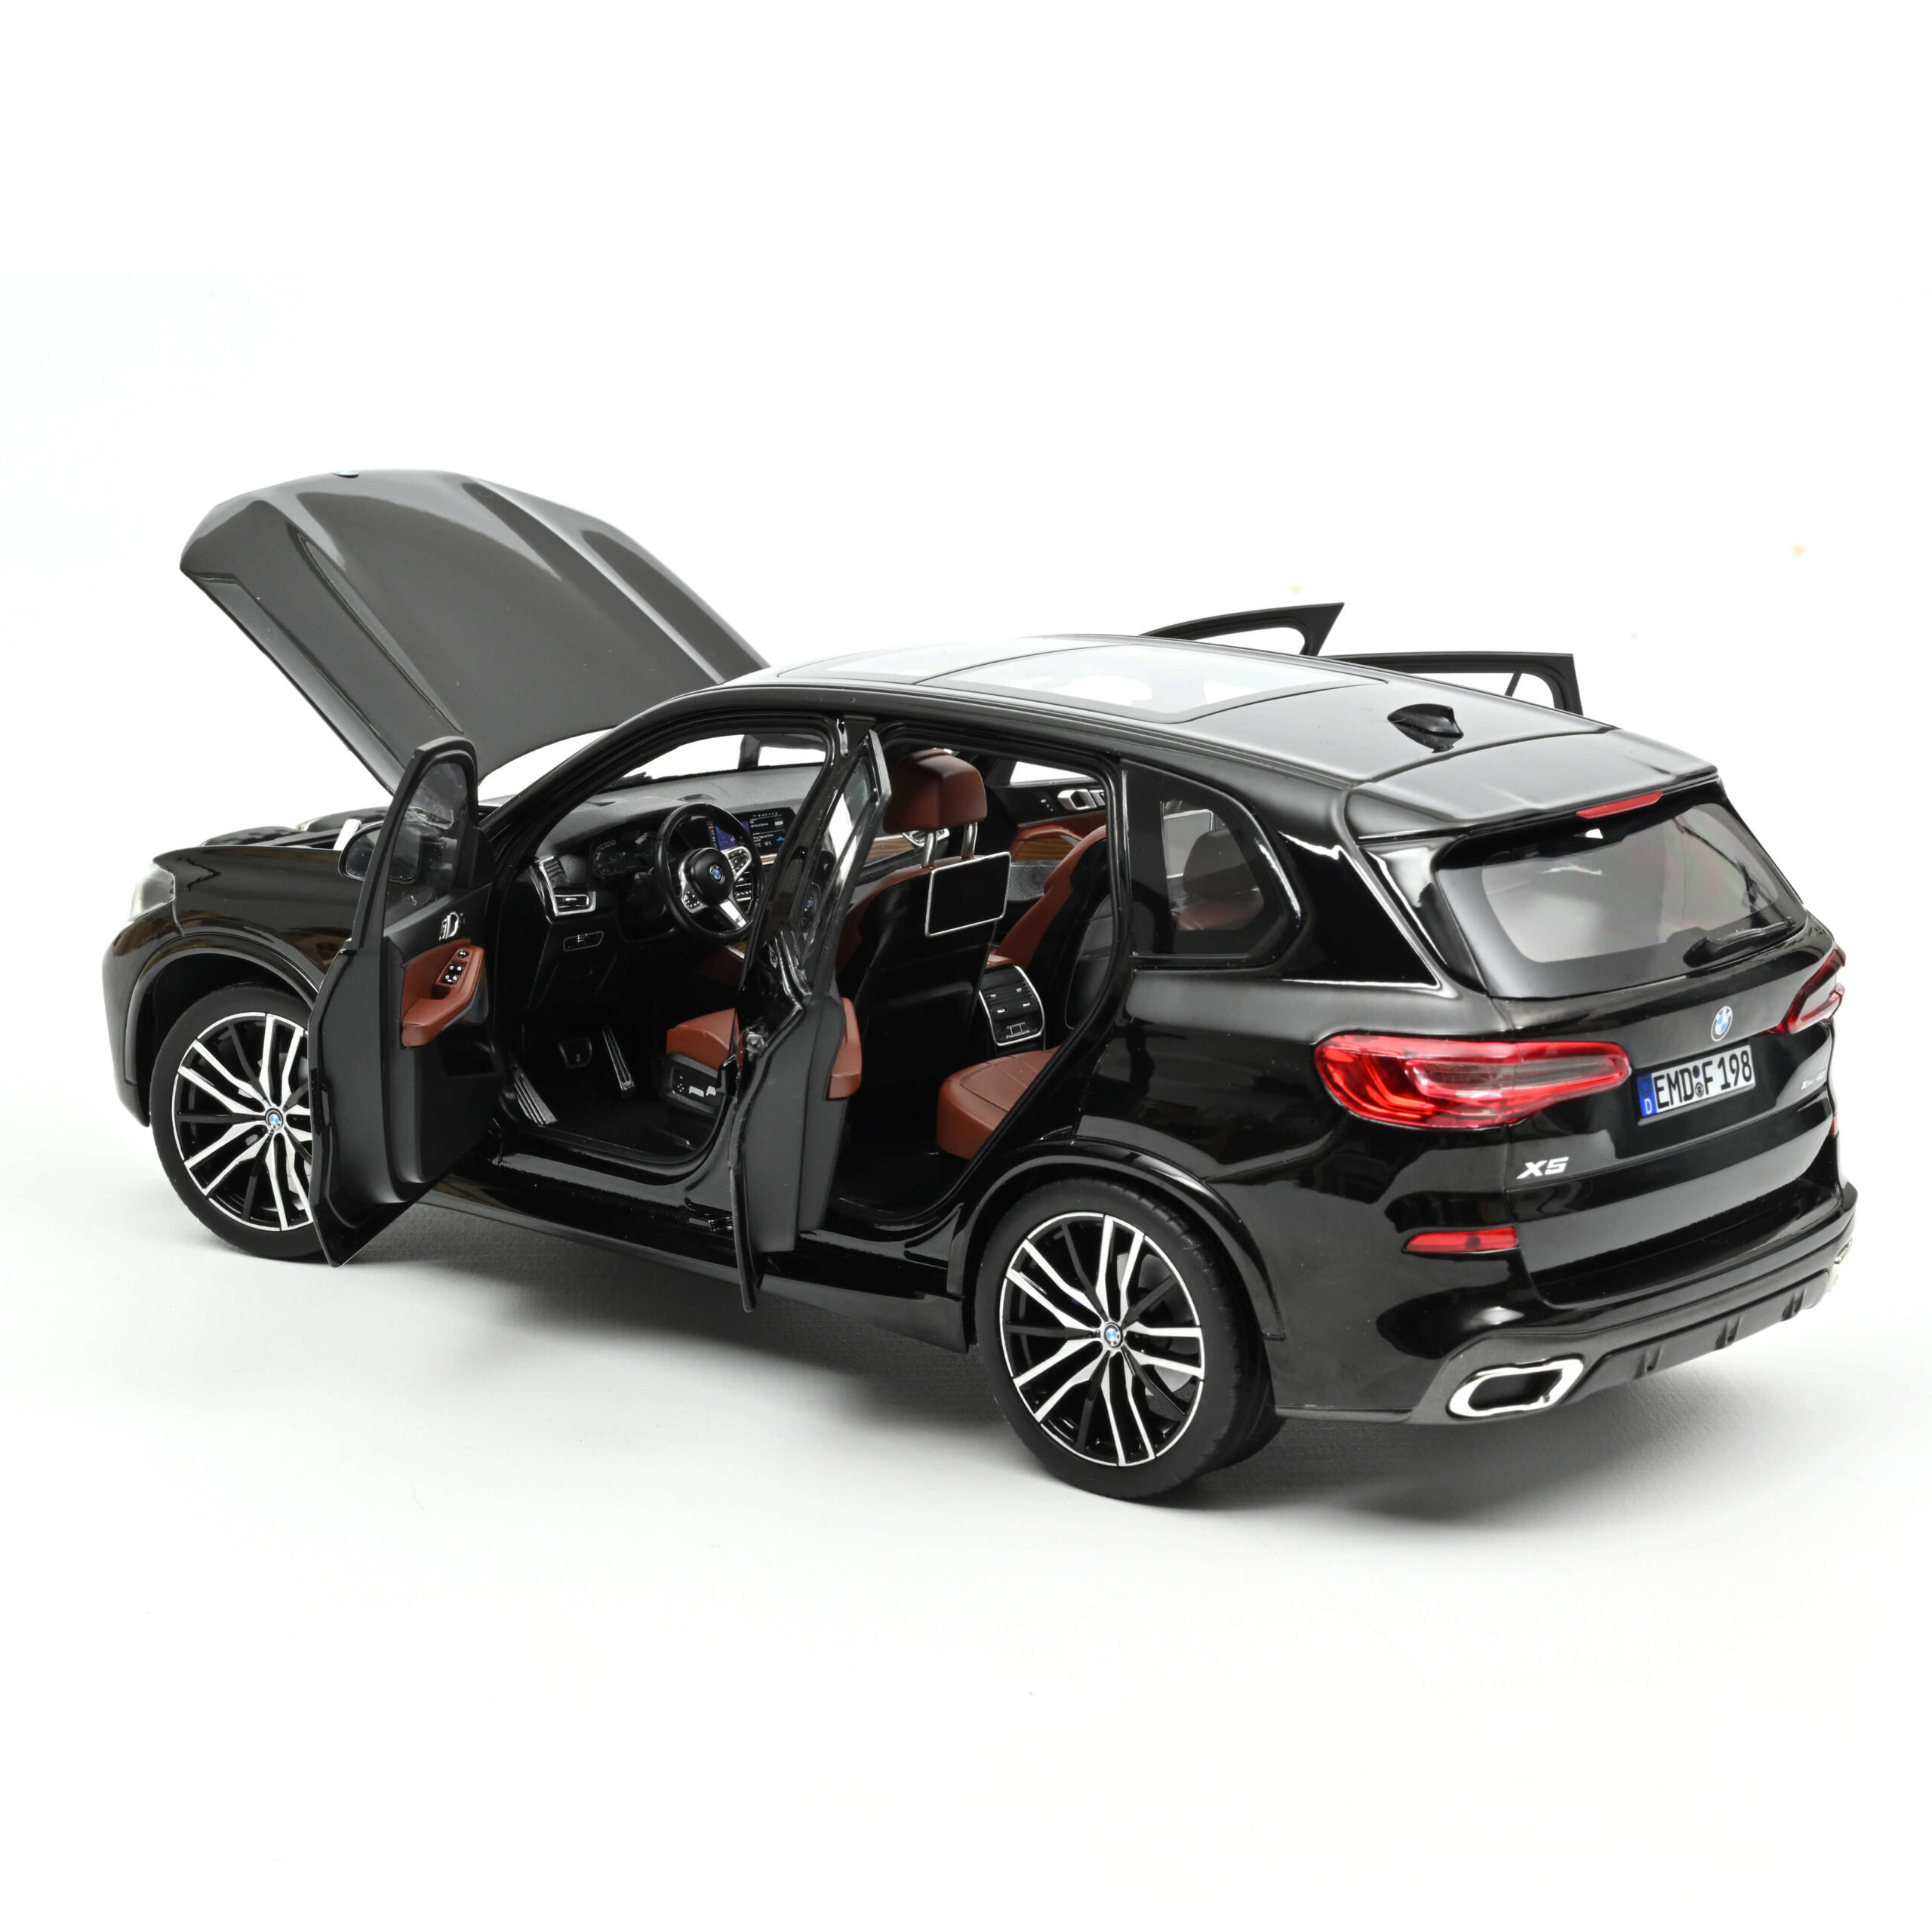 BMW X5 2019 – Black metallic